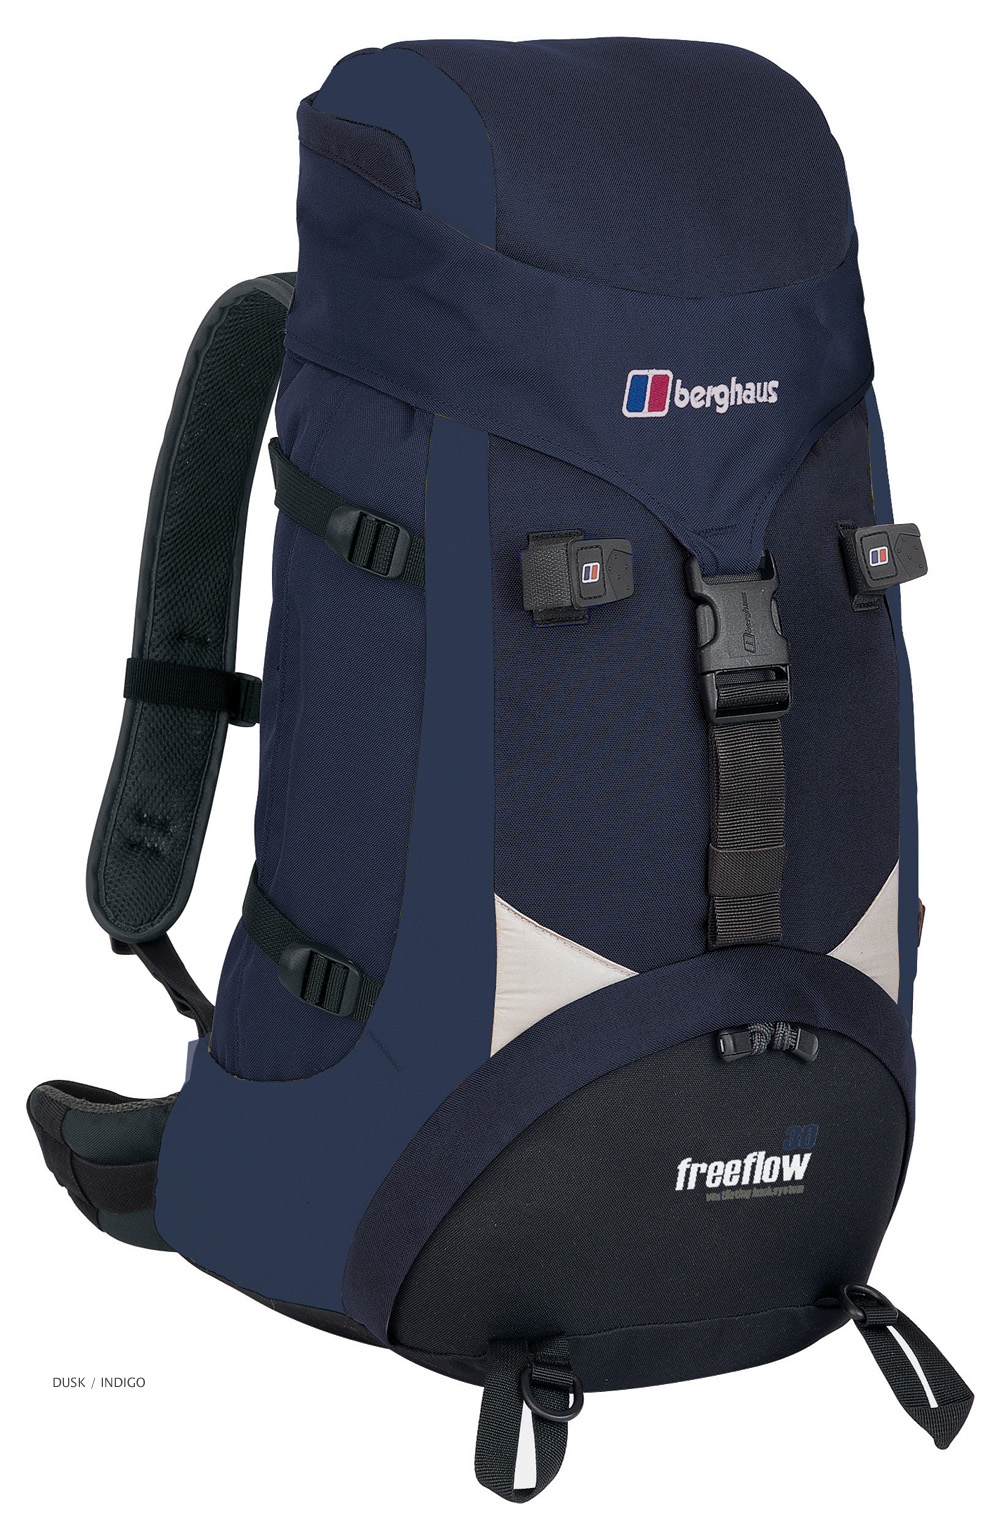 Berghaus plecak Freeflow IV 30+6